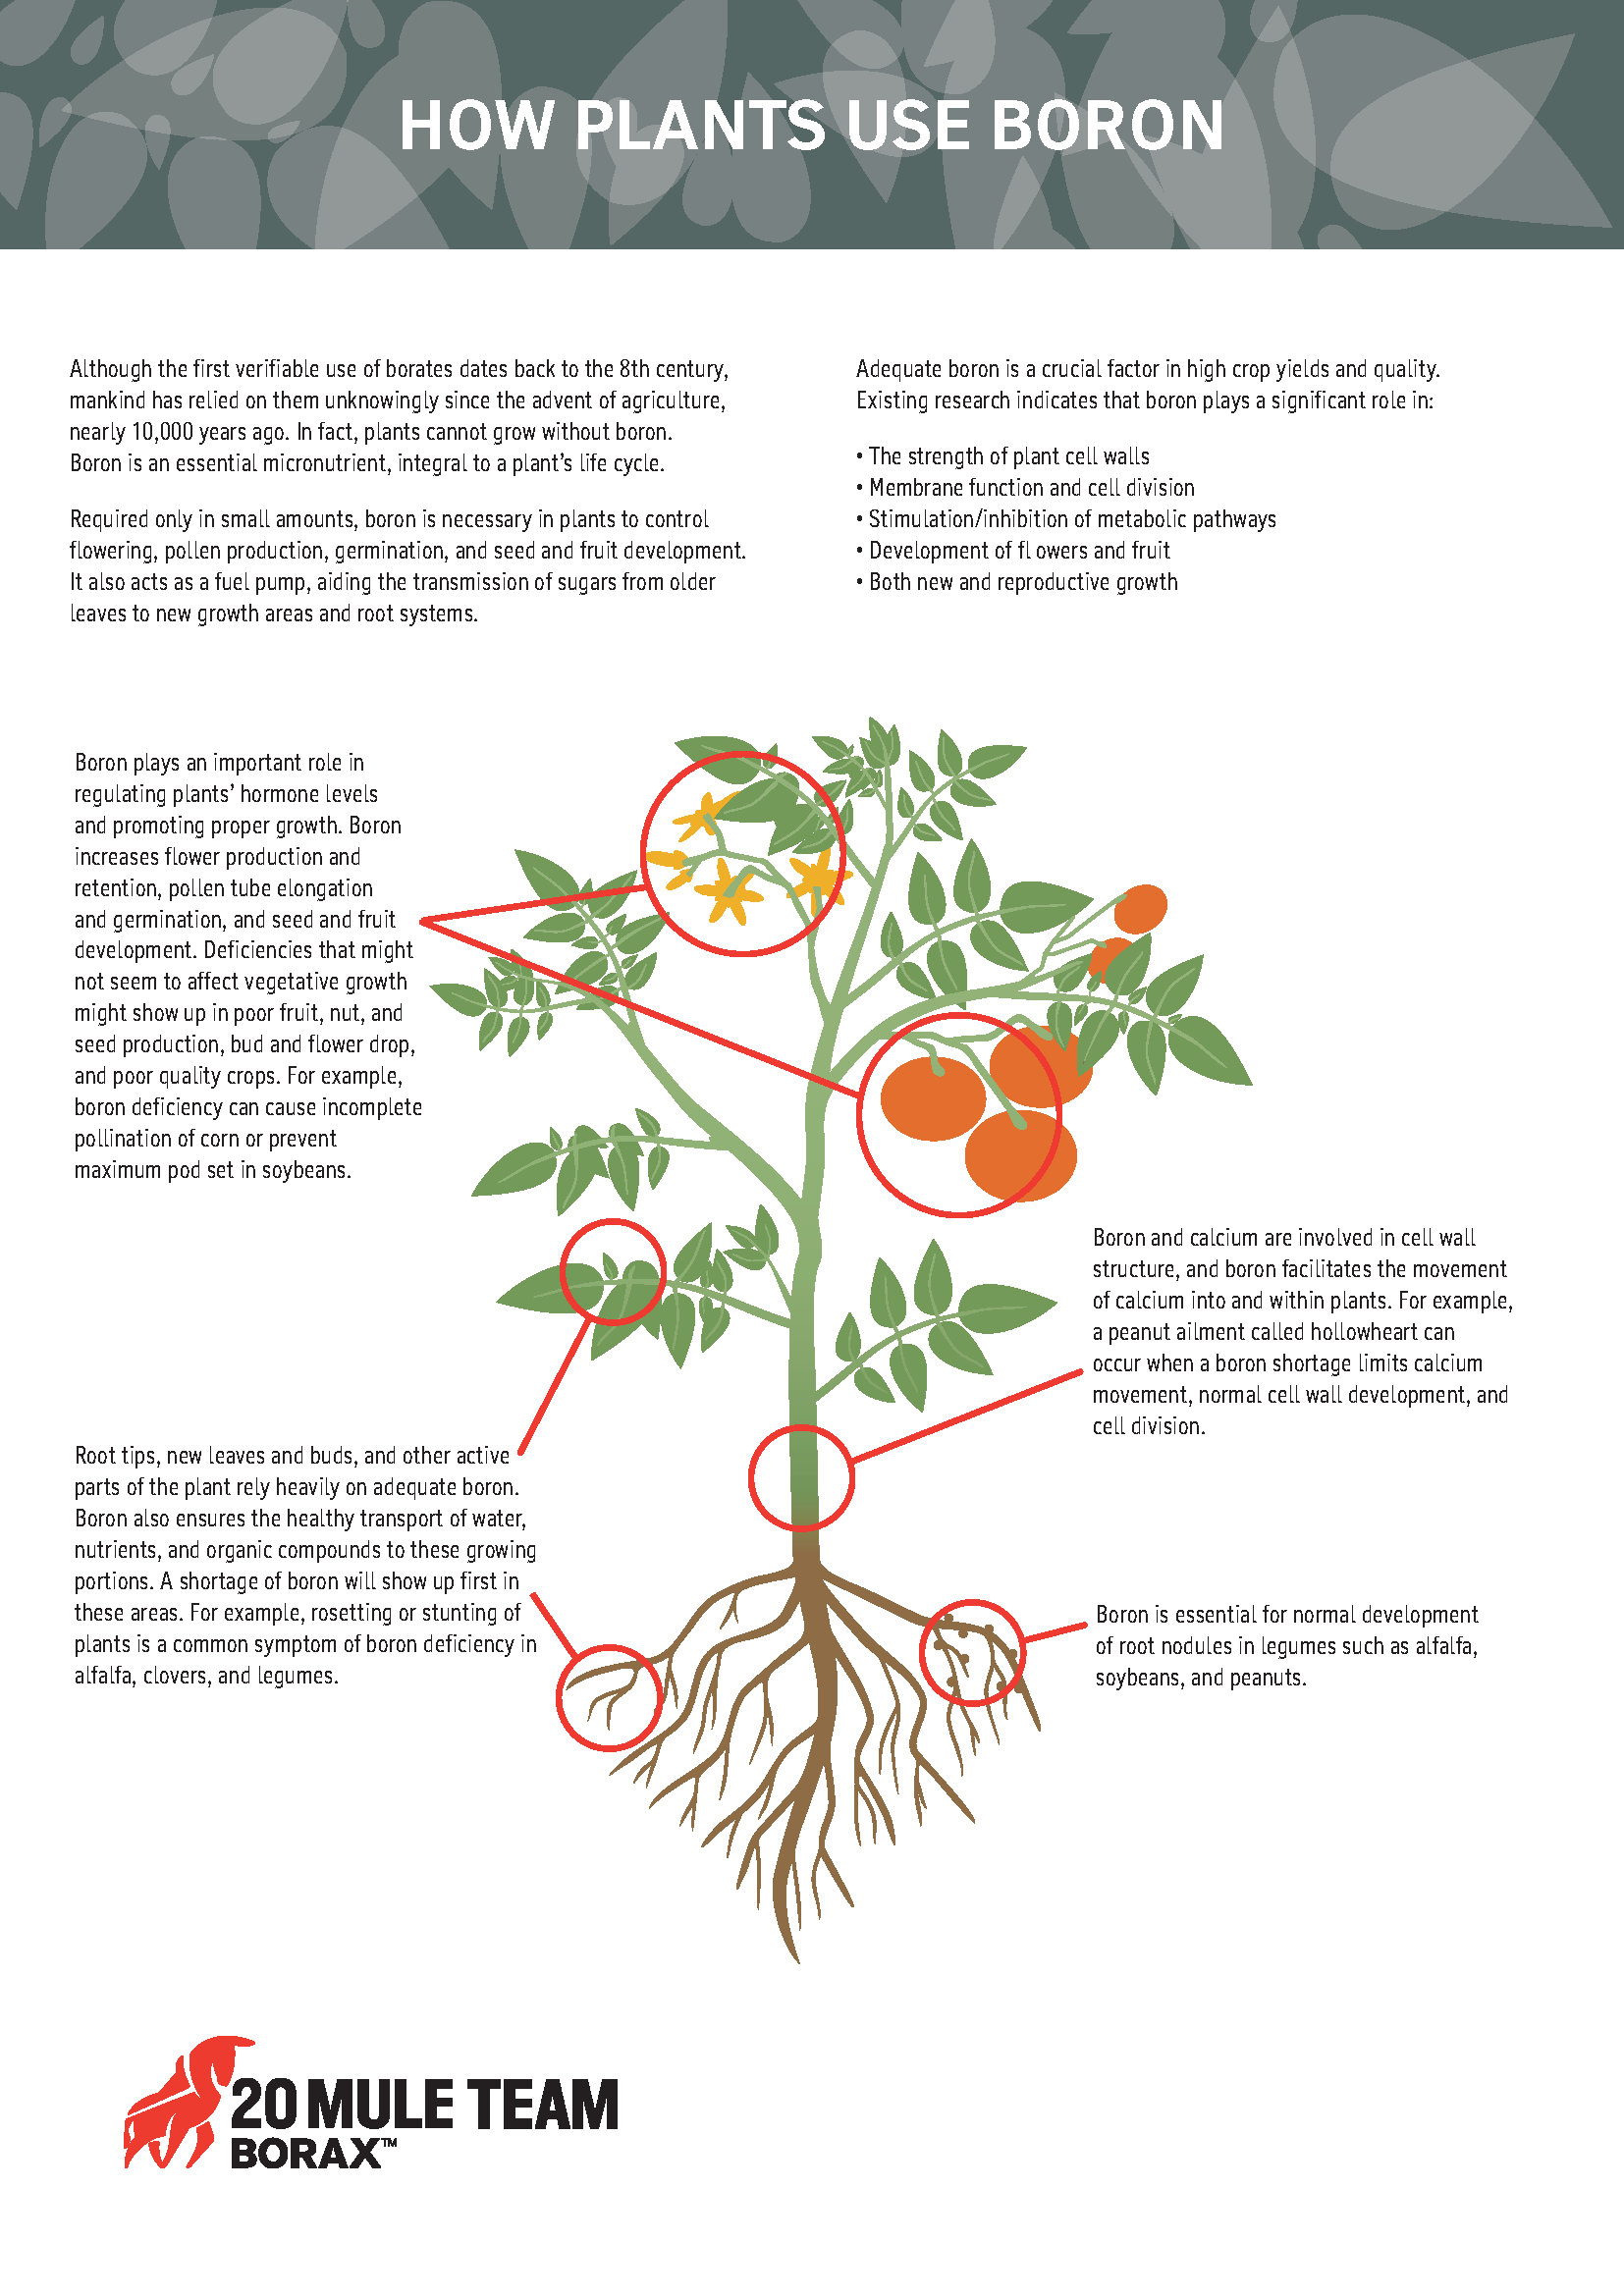 A diagram of how plants use boron